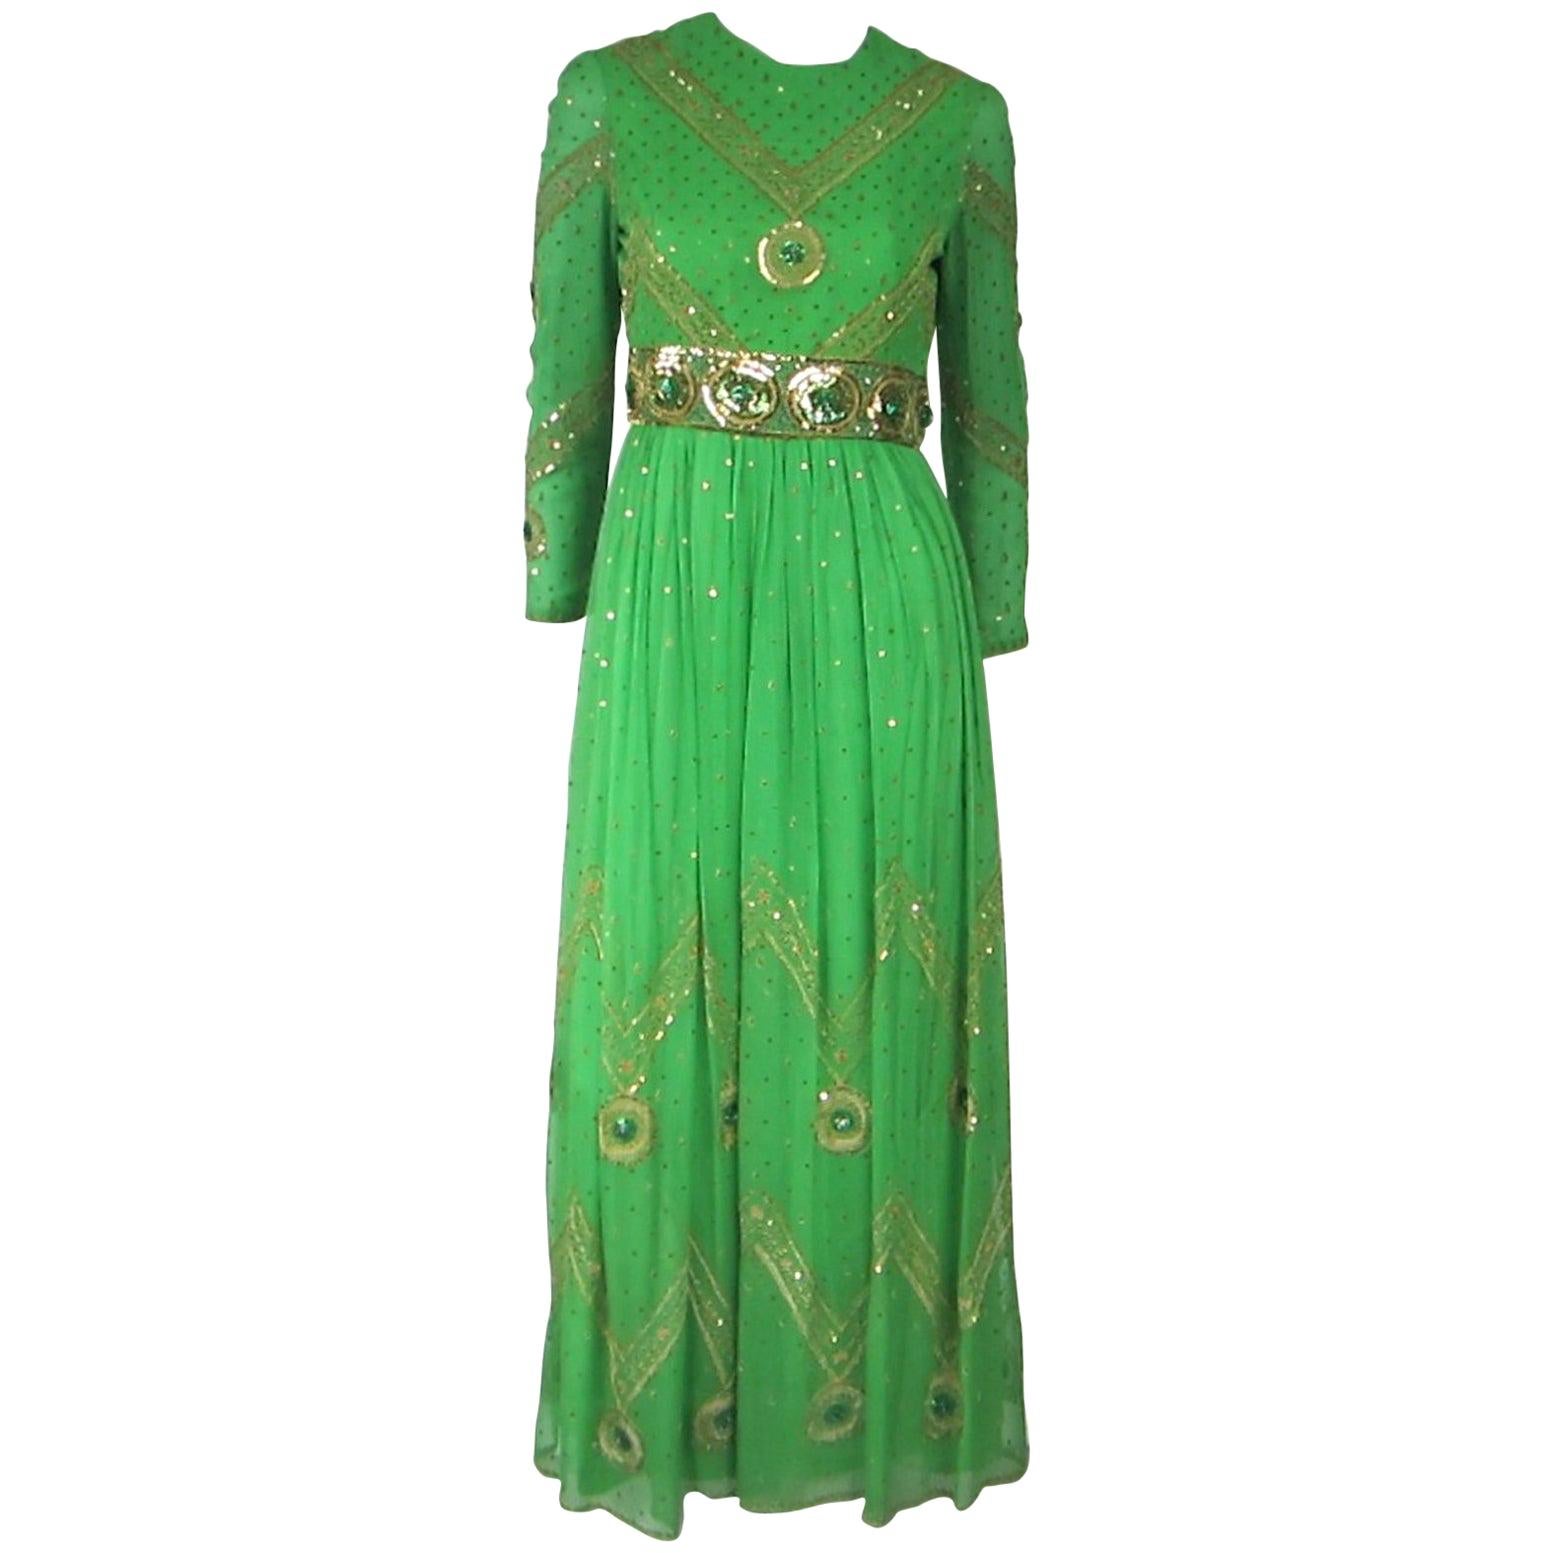 Saz Surjit & Adash Gill Gown Beaded Silk Dress 1970s